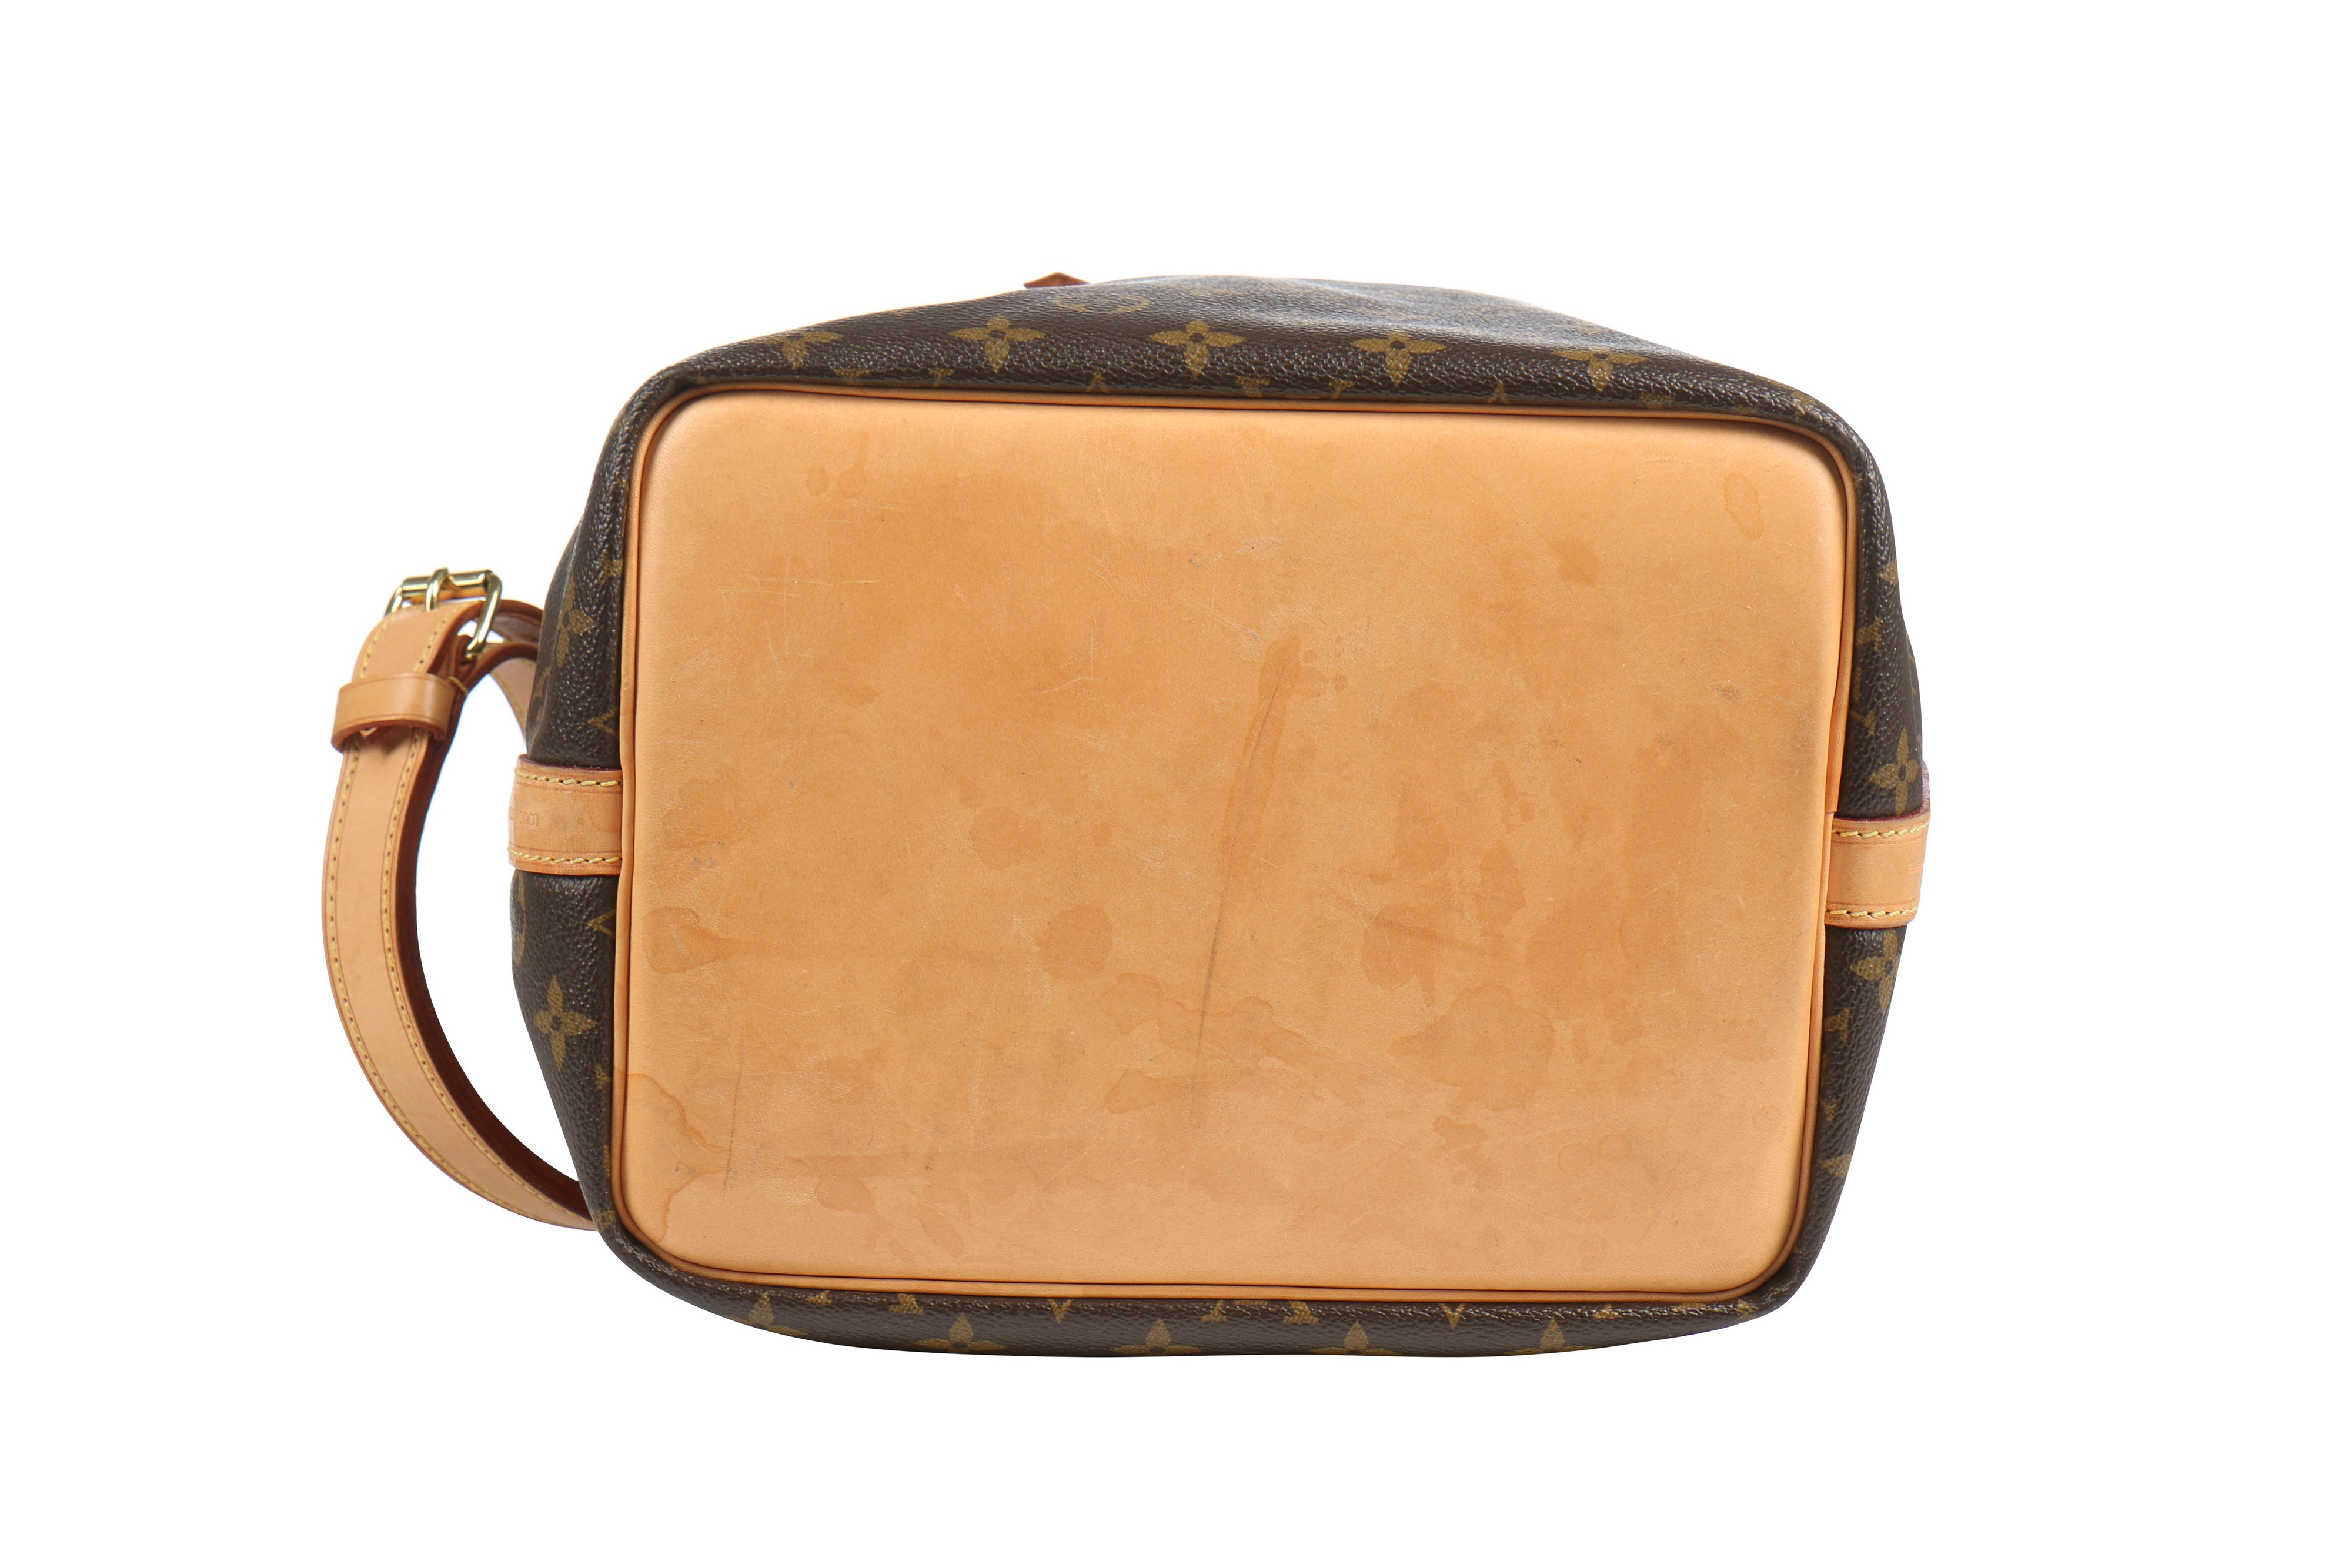 Sold at Auction: Louis Vuitton Alma Travel Bag